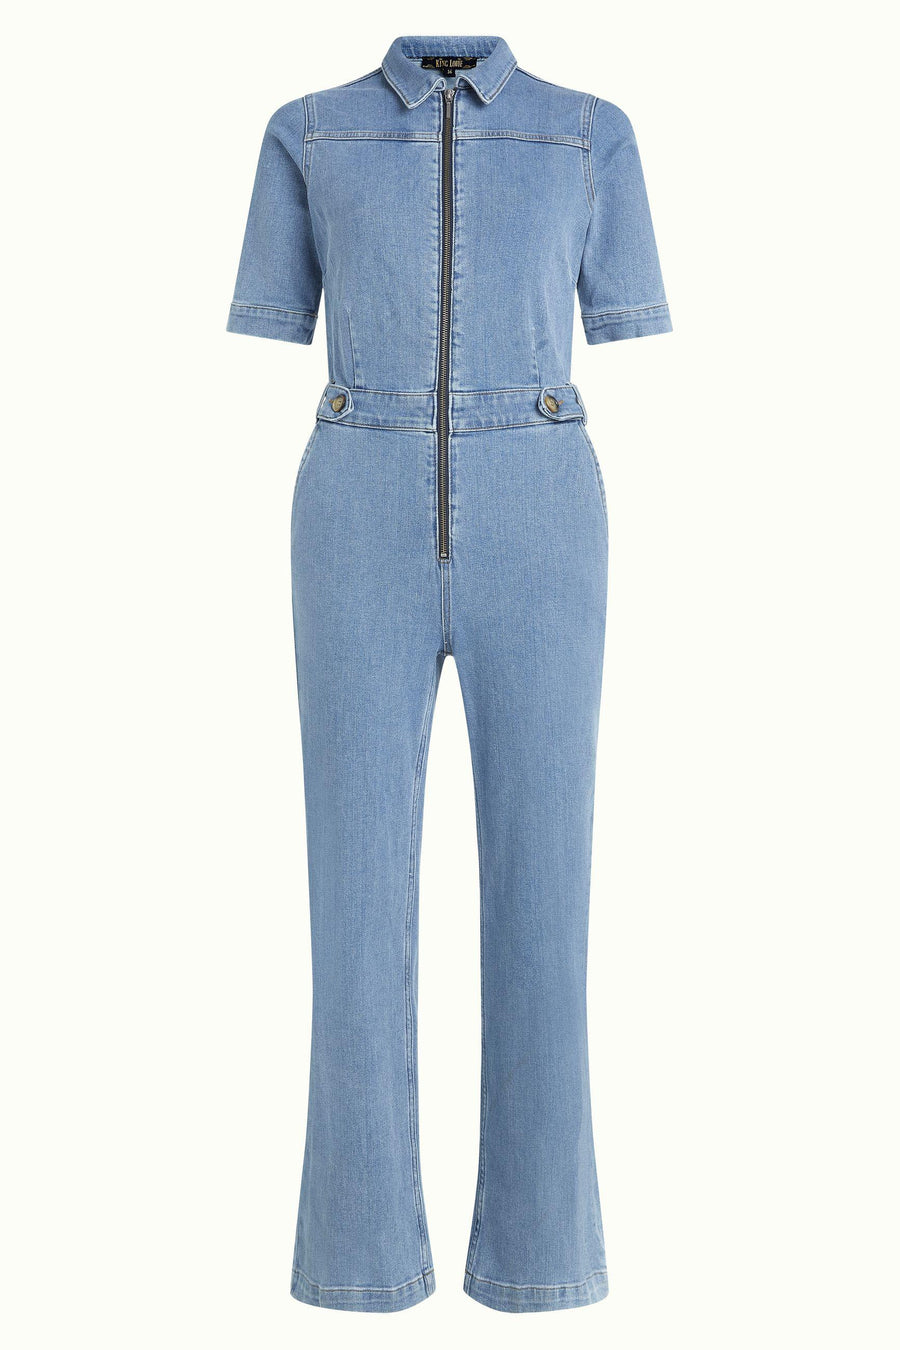 King Louie Garbo Zip Jumpsuit Jeans-Overall Strata Denim heaven blue